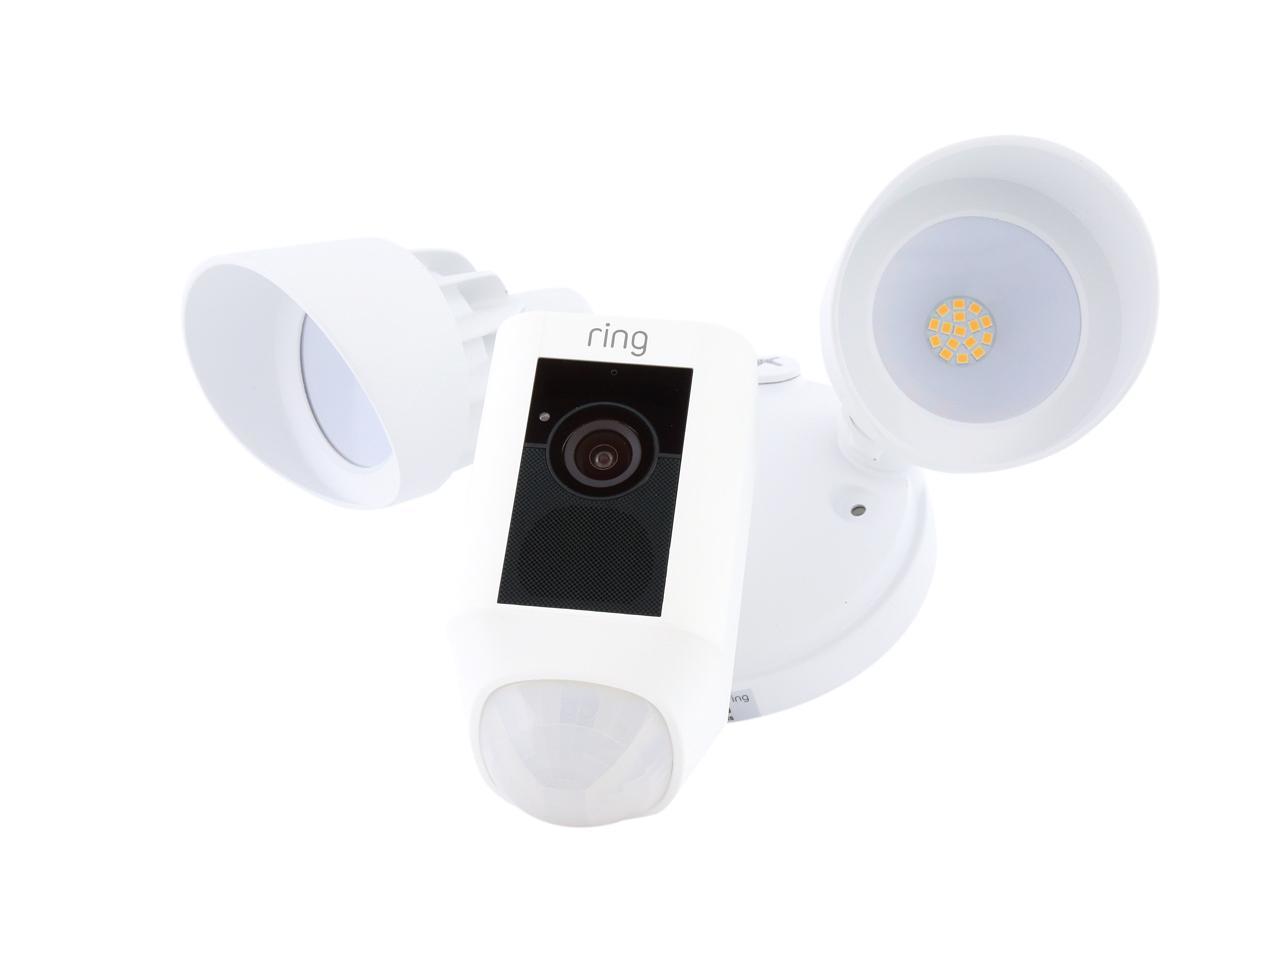 lowest price ring floodlight cam